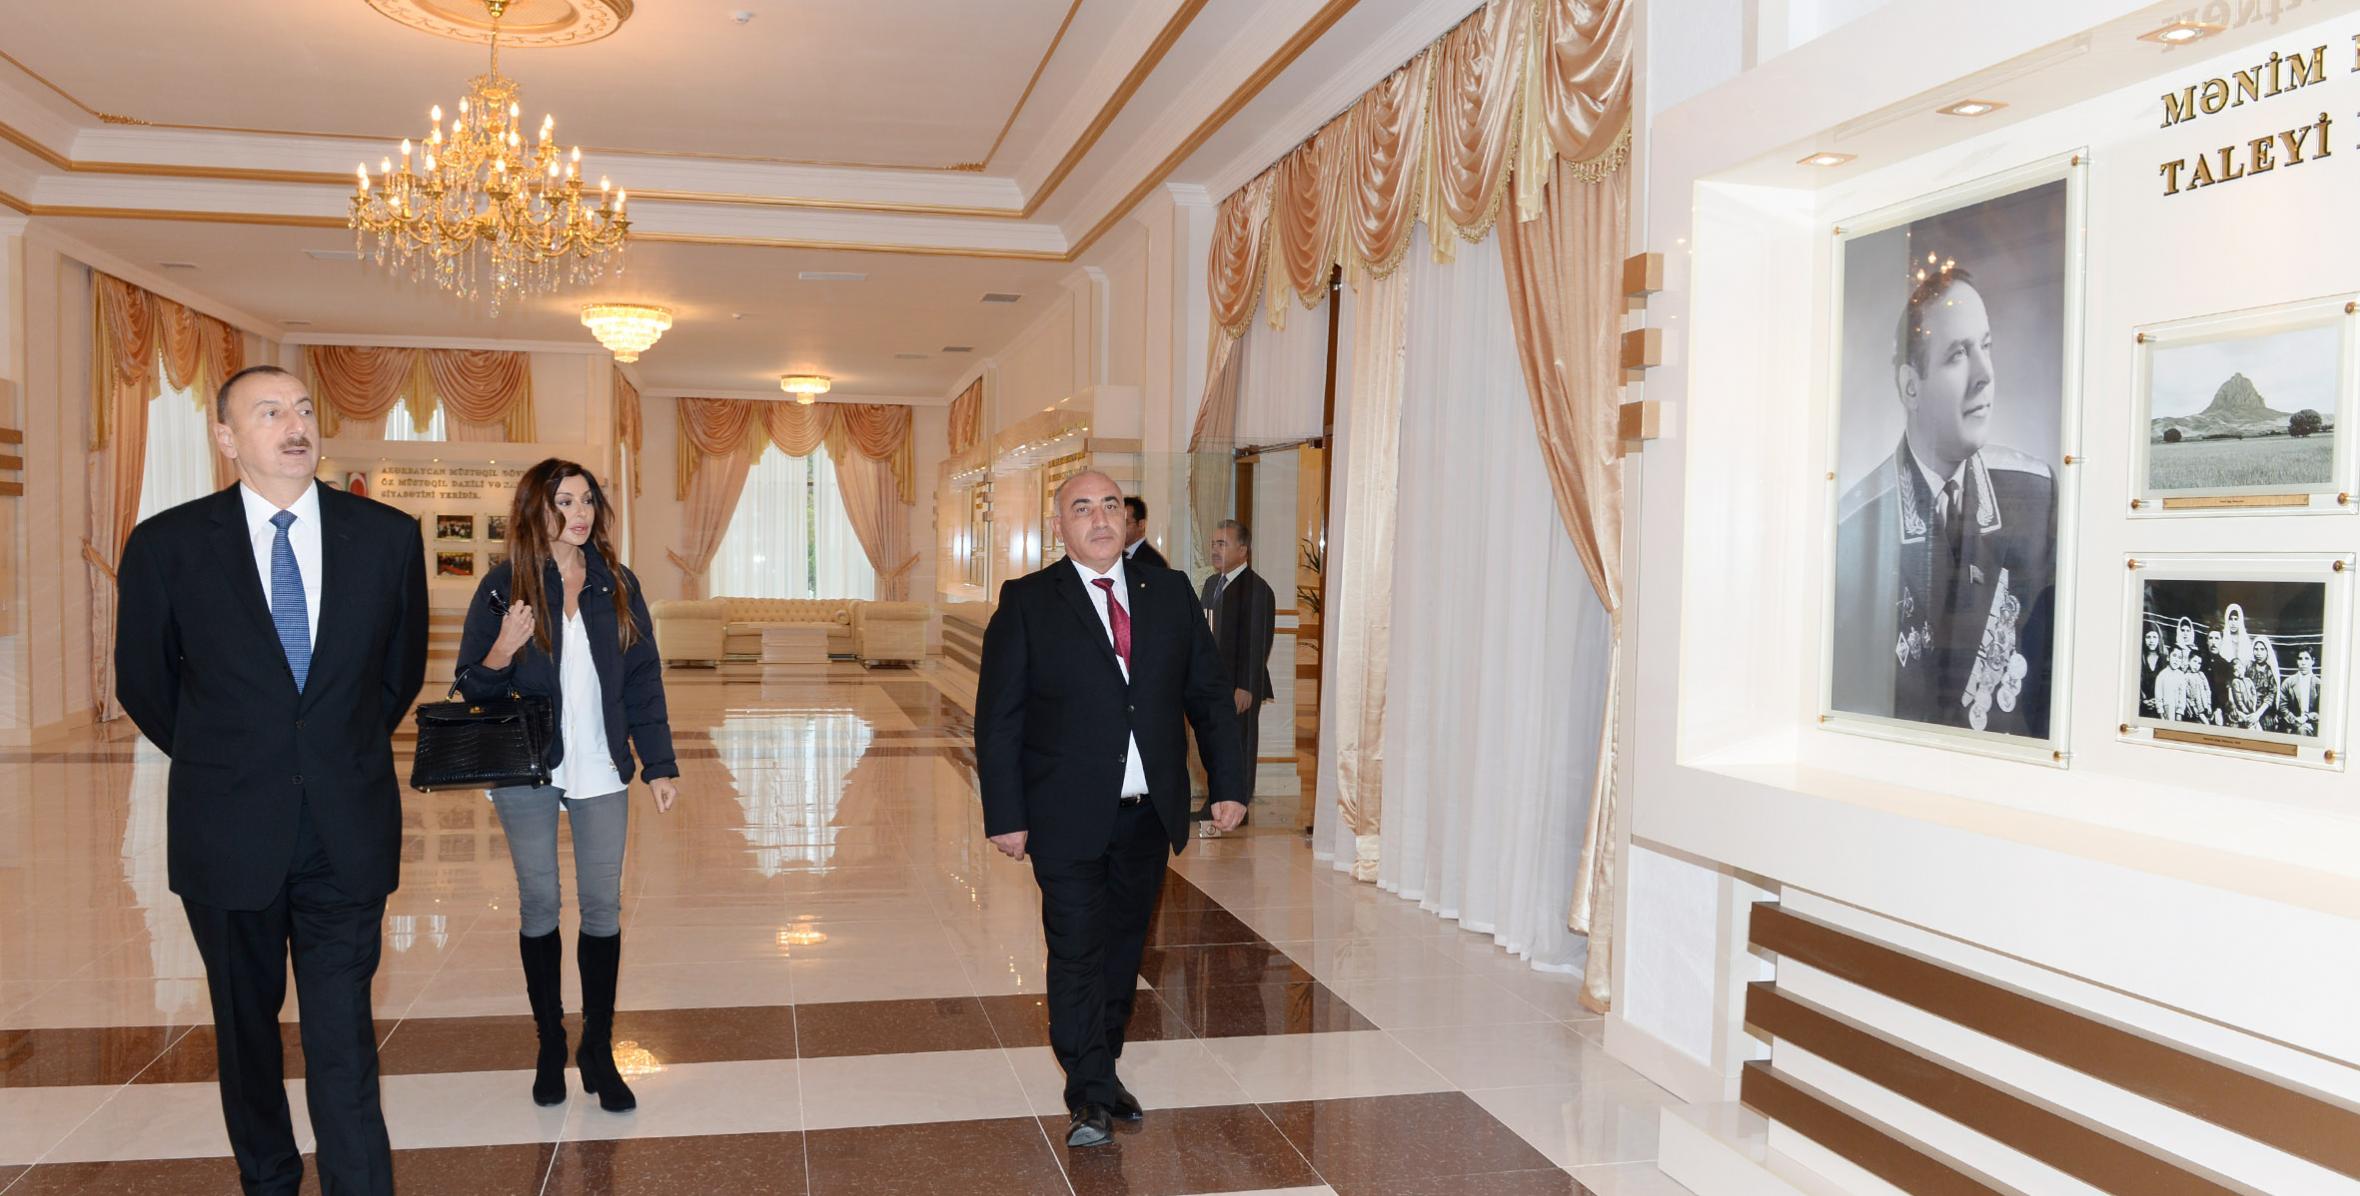 Ilham Aliyev attended the opening of the Heydar Aliyev Center in Goranboy